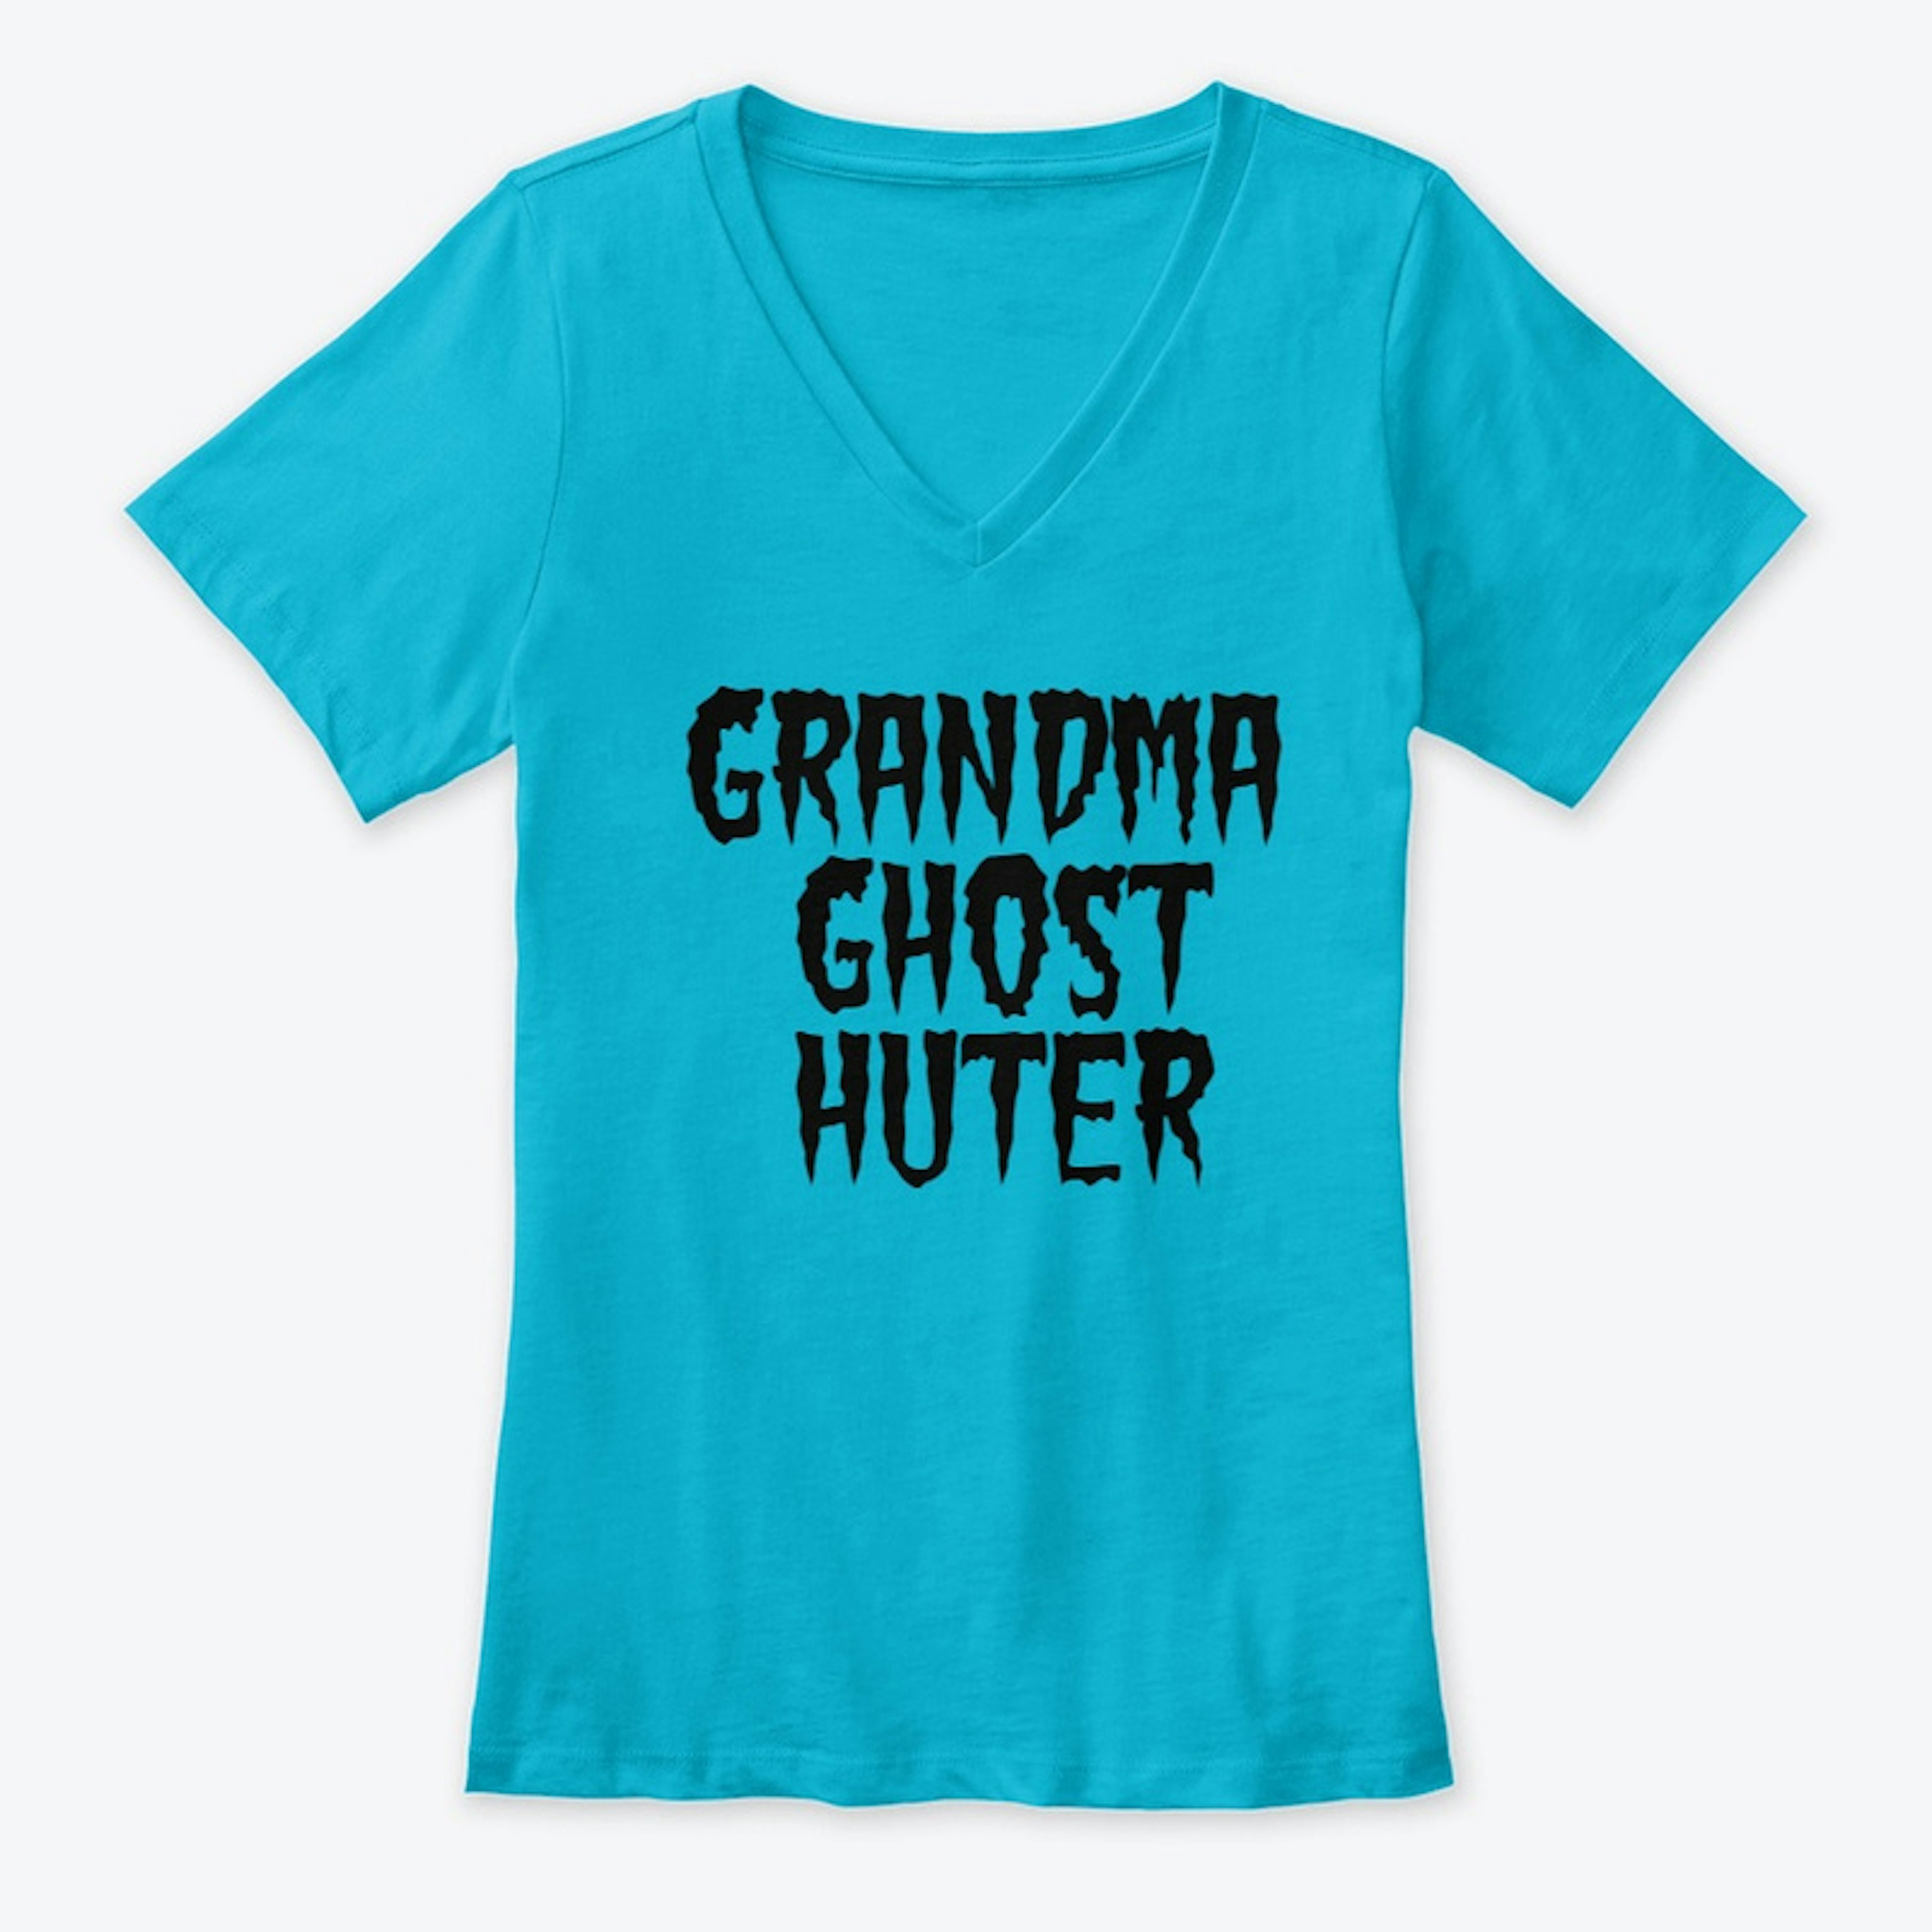 Grandma Ghost Hunter light tee